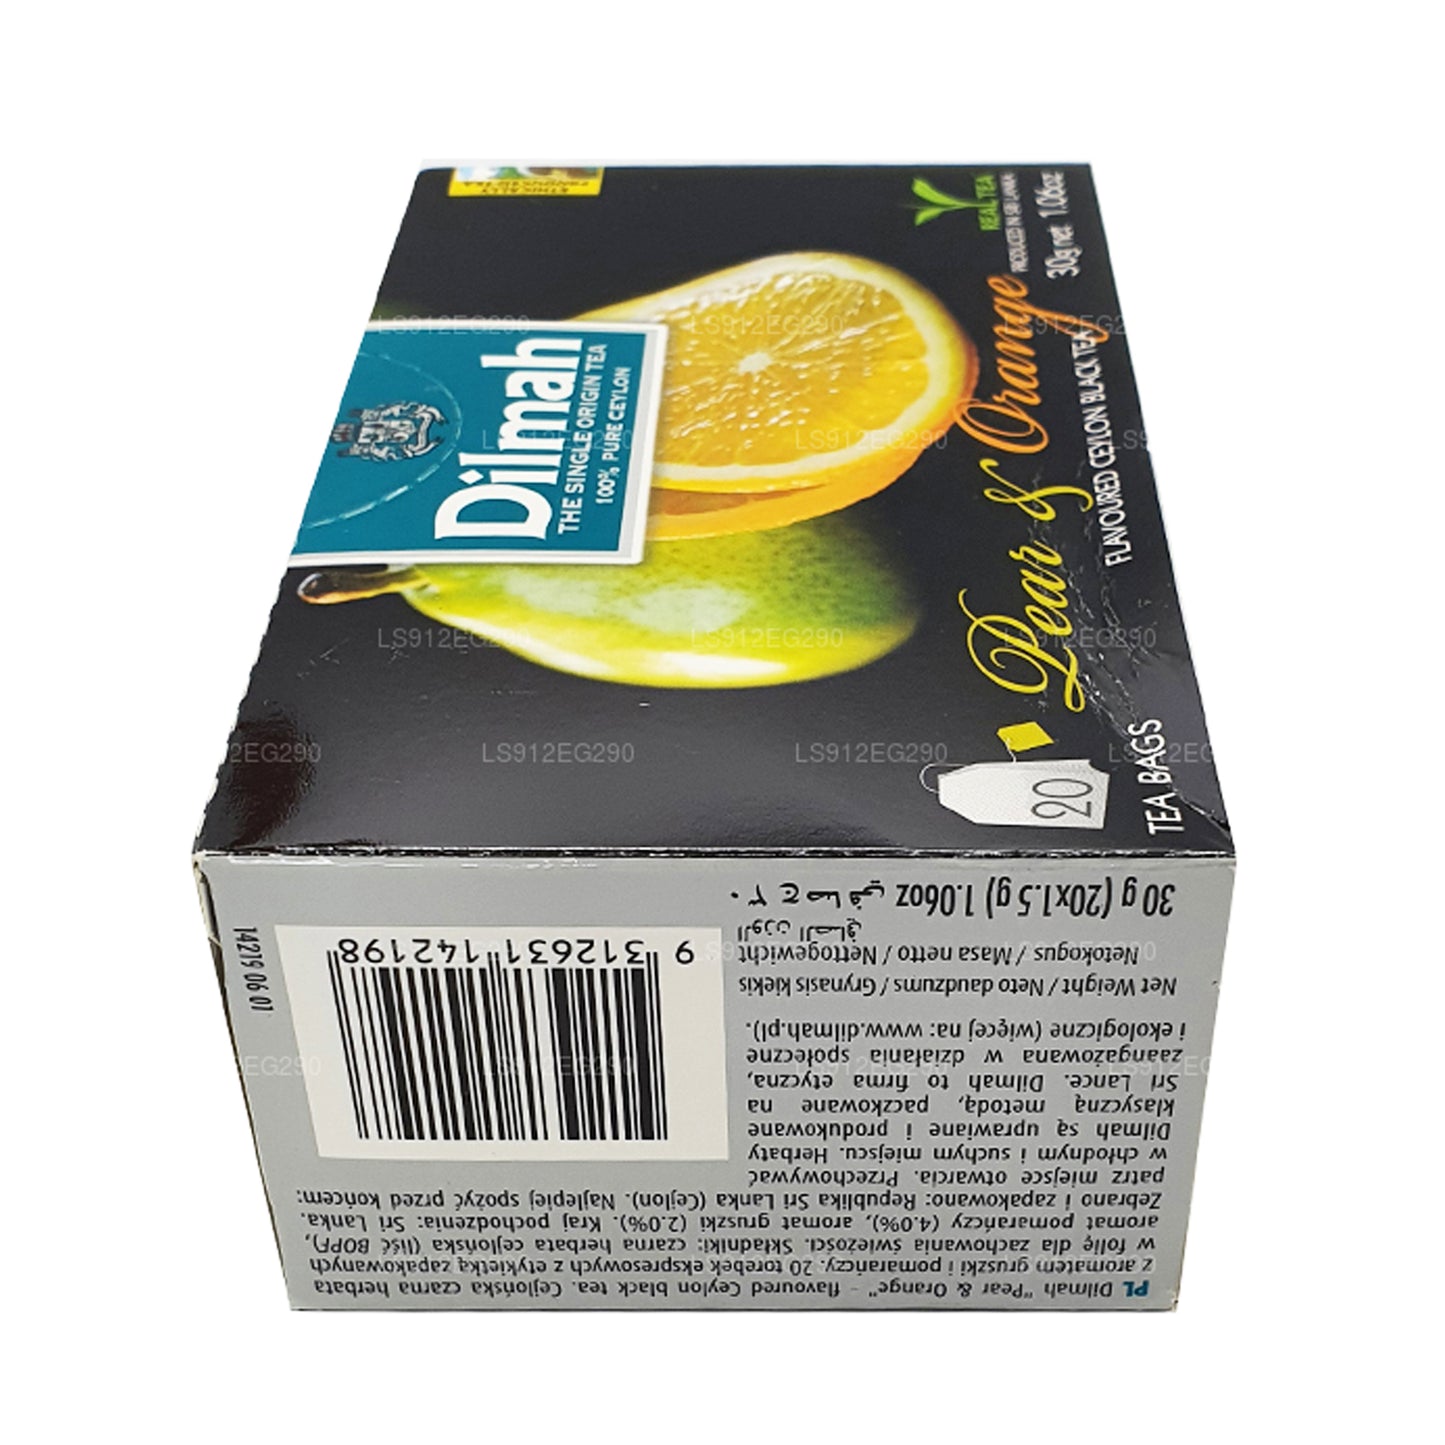 Dilmah zwarte thee van Ceylon met peer en sinaasappelsmaak (30 g) 20 theezakjes